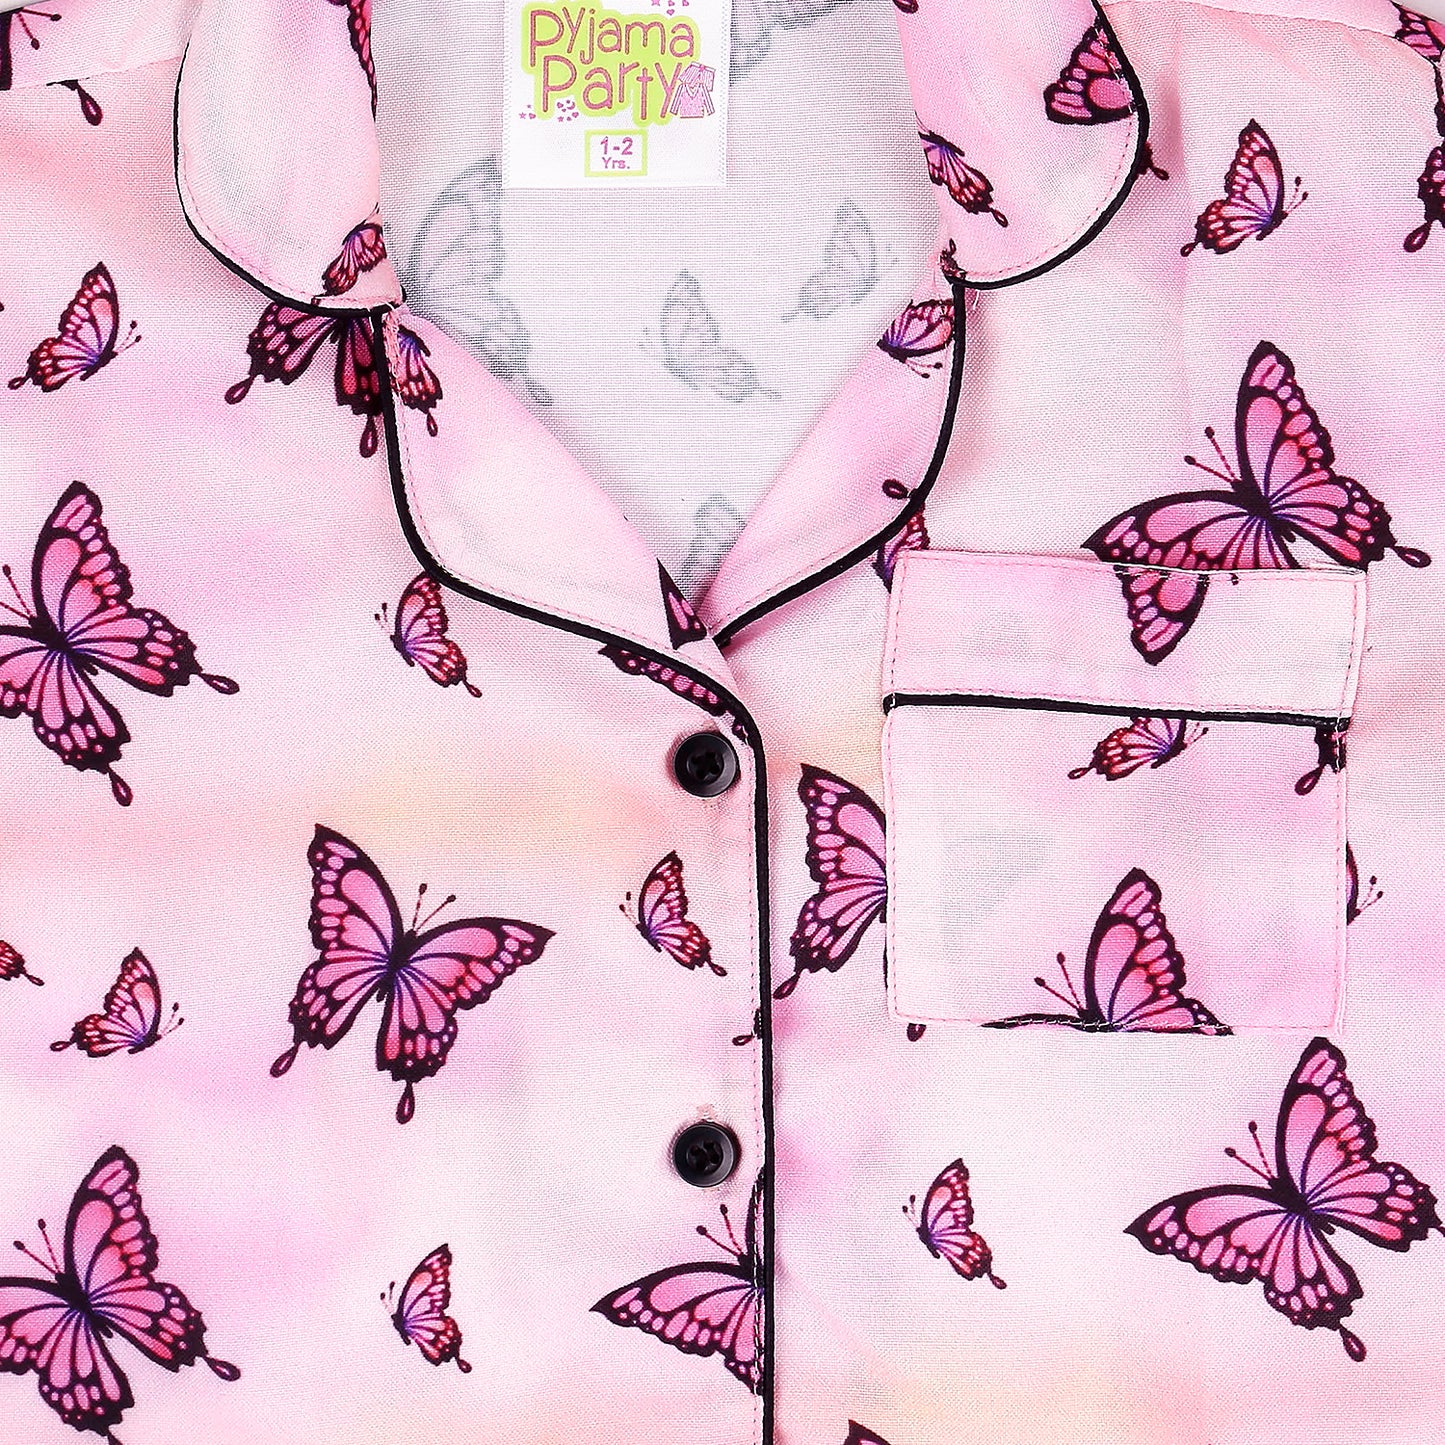 Butterfly Kids Pj Set - Cotton Rayon Pj Set with Notched Collar